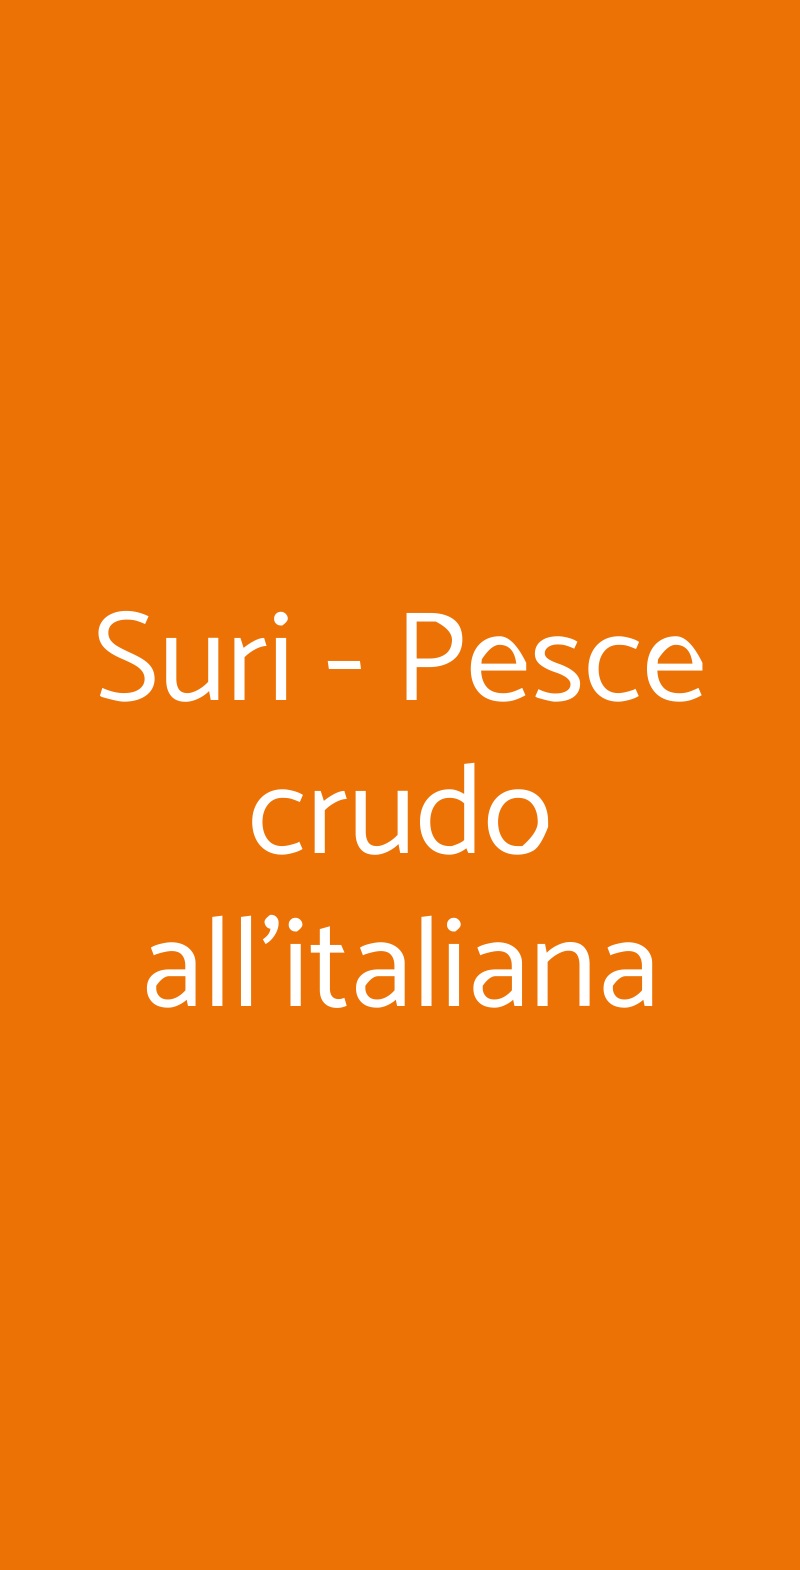 Suri - Pesce crudo all'italiana Milano menù 1 pagina